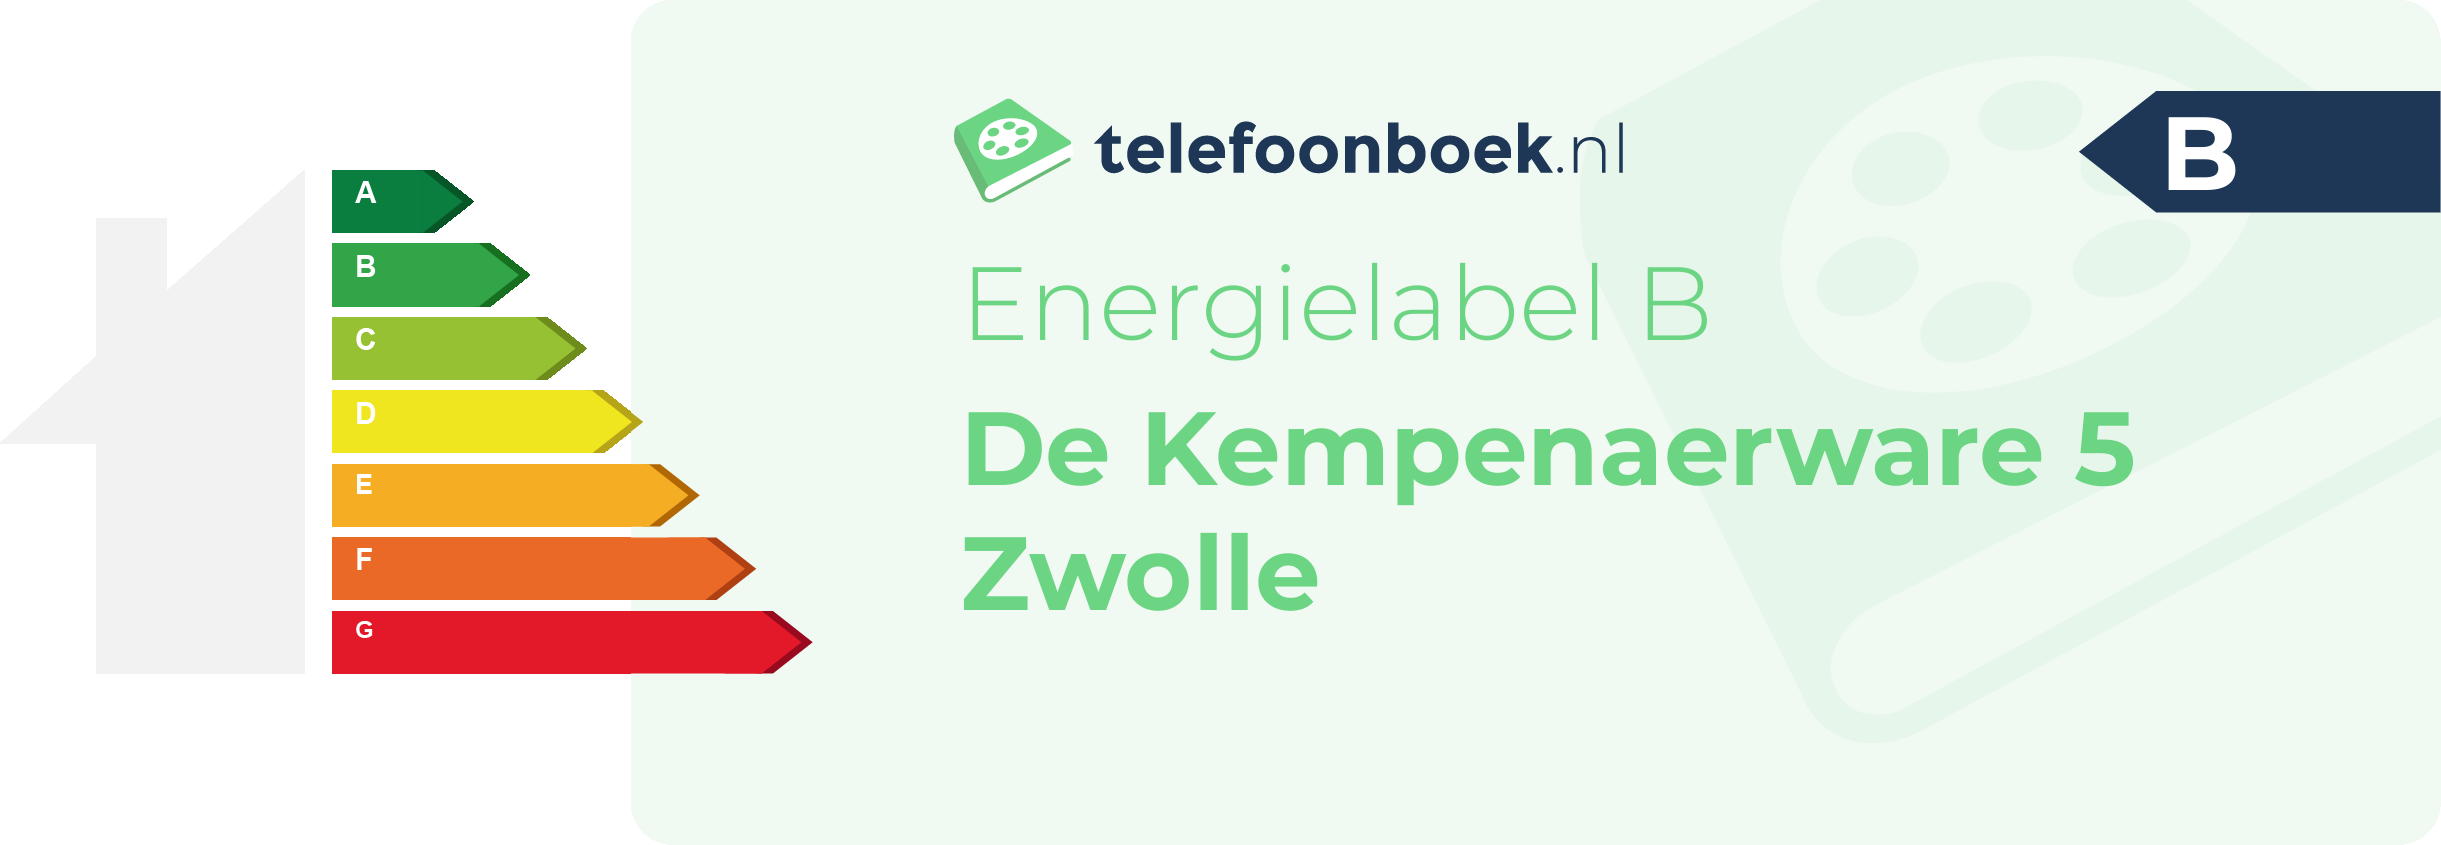 Energielabel De Kempenaerware 5 Zwolle